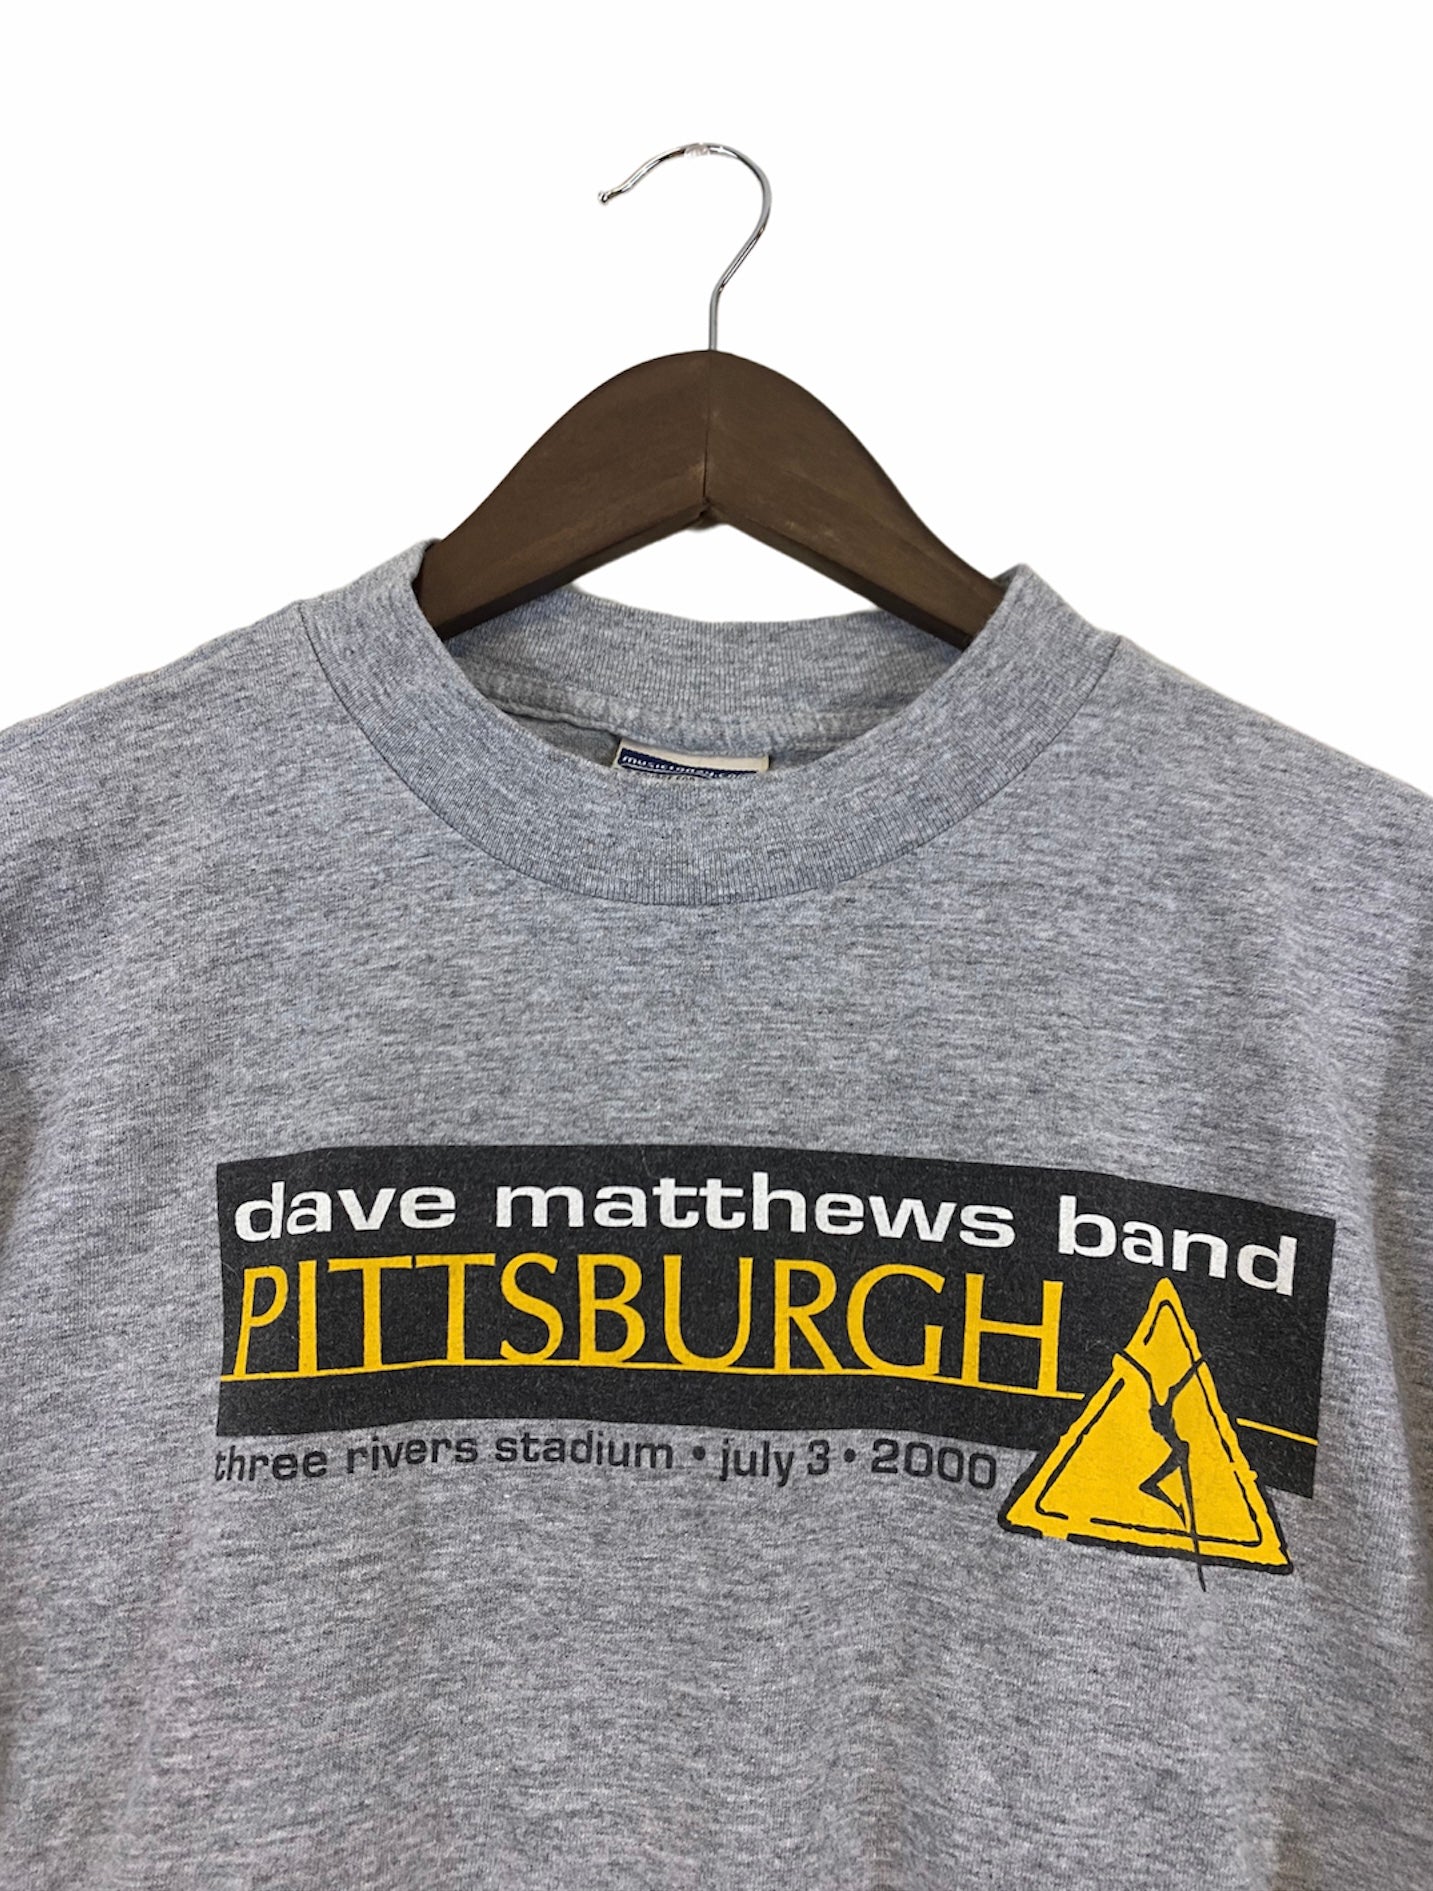 2000 Dave Mathew’s Band Pittsburgh T-Shirt